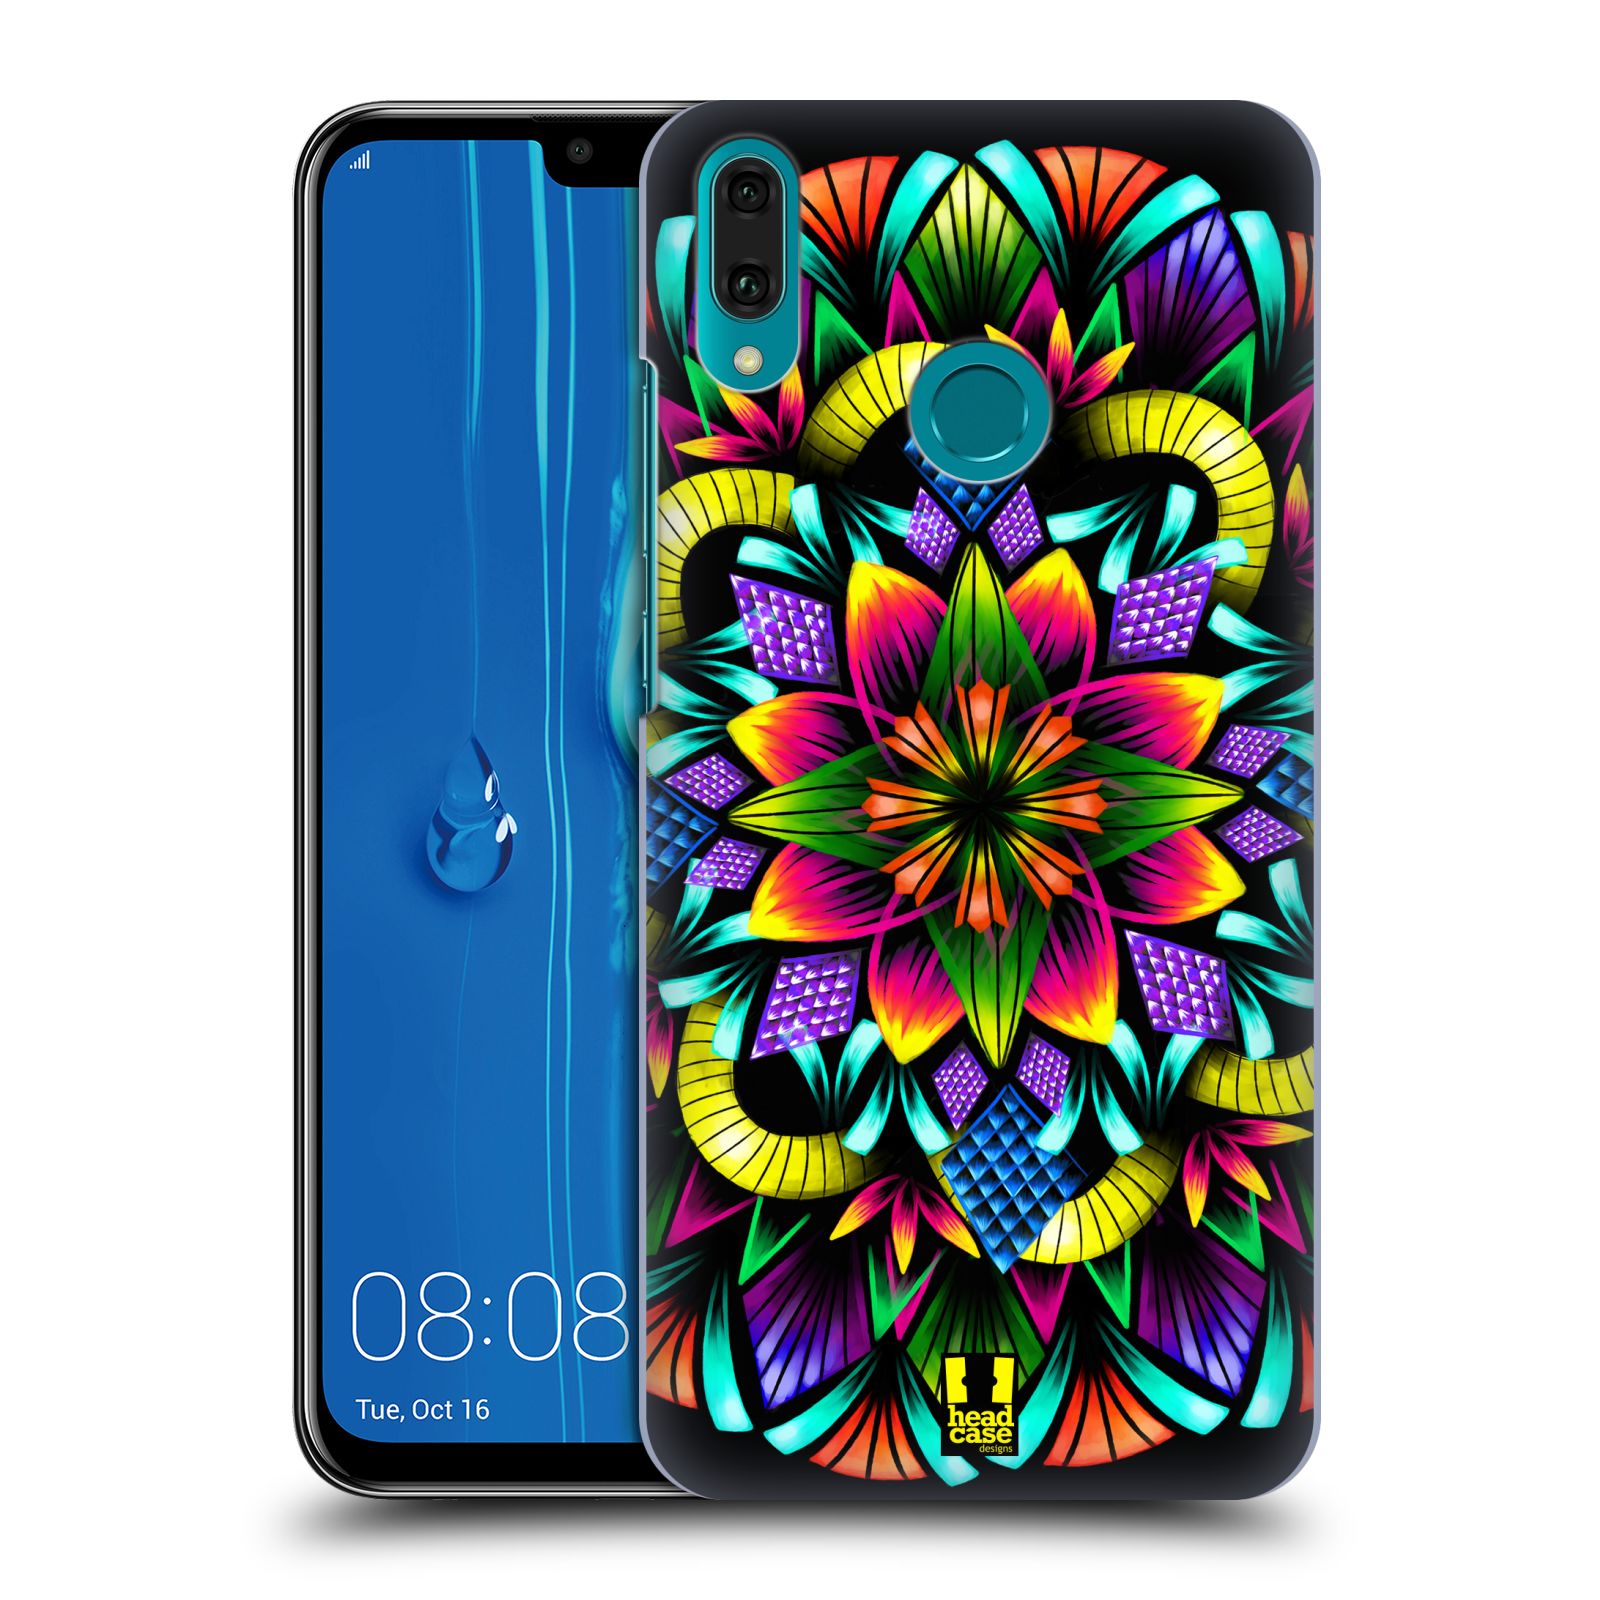 Pouzdro na mobil Huawei Y9 2019 - HEAD CASE - vzor Indie Mandala kaleidoskop barevný vzor KVĚTINA